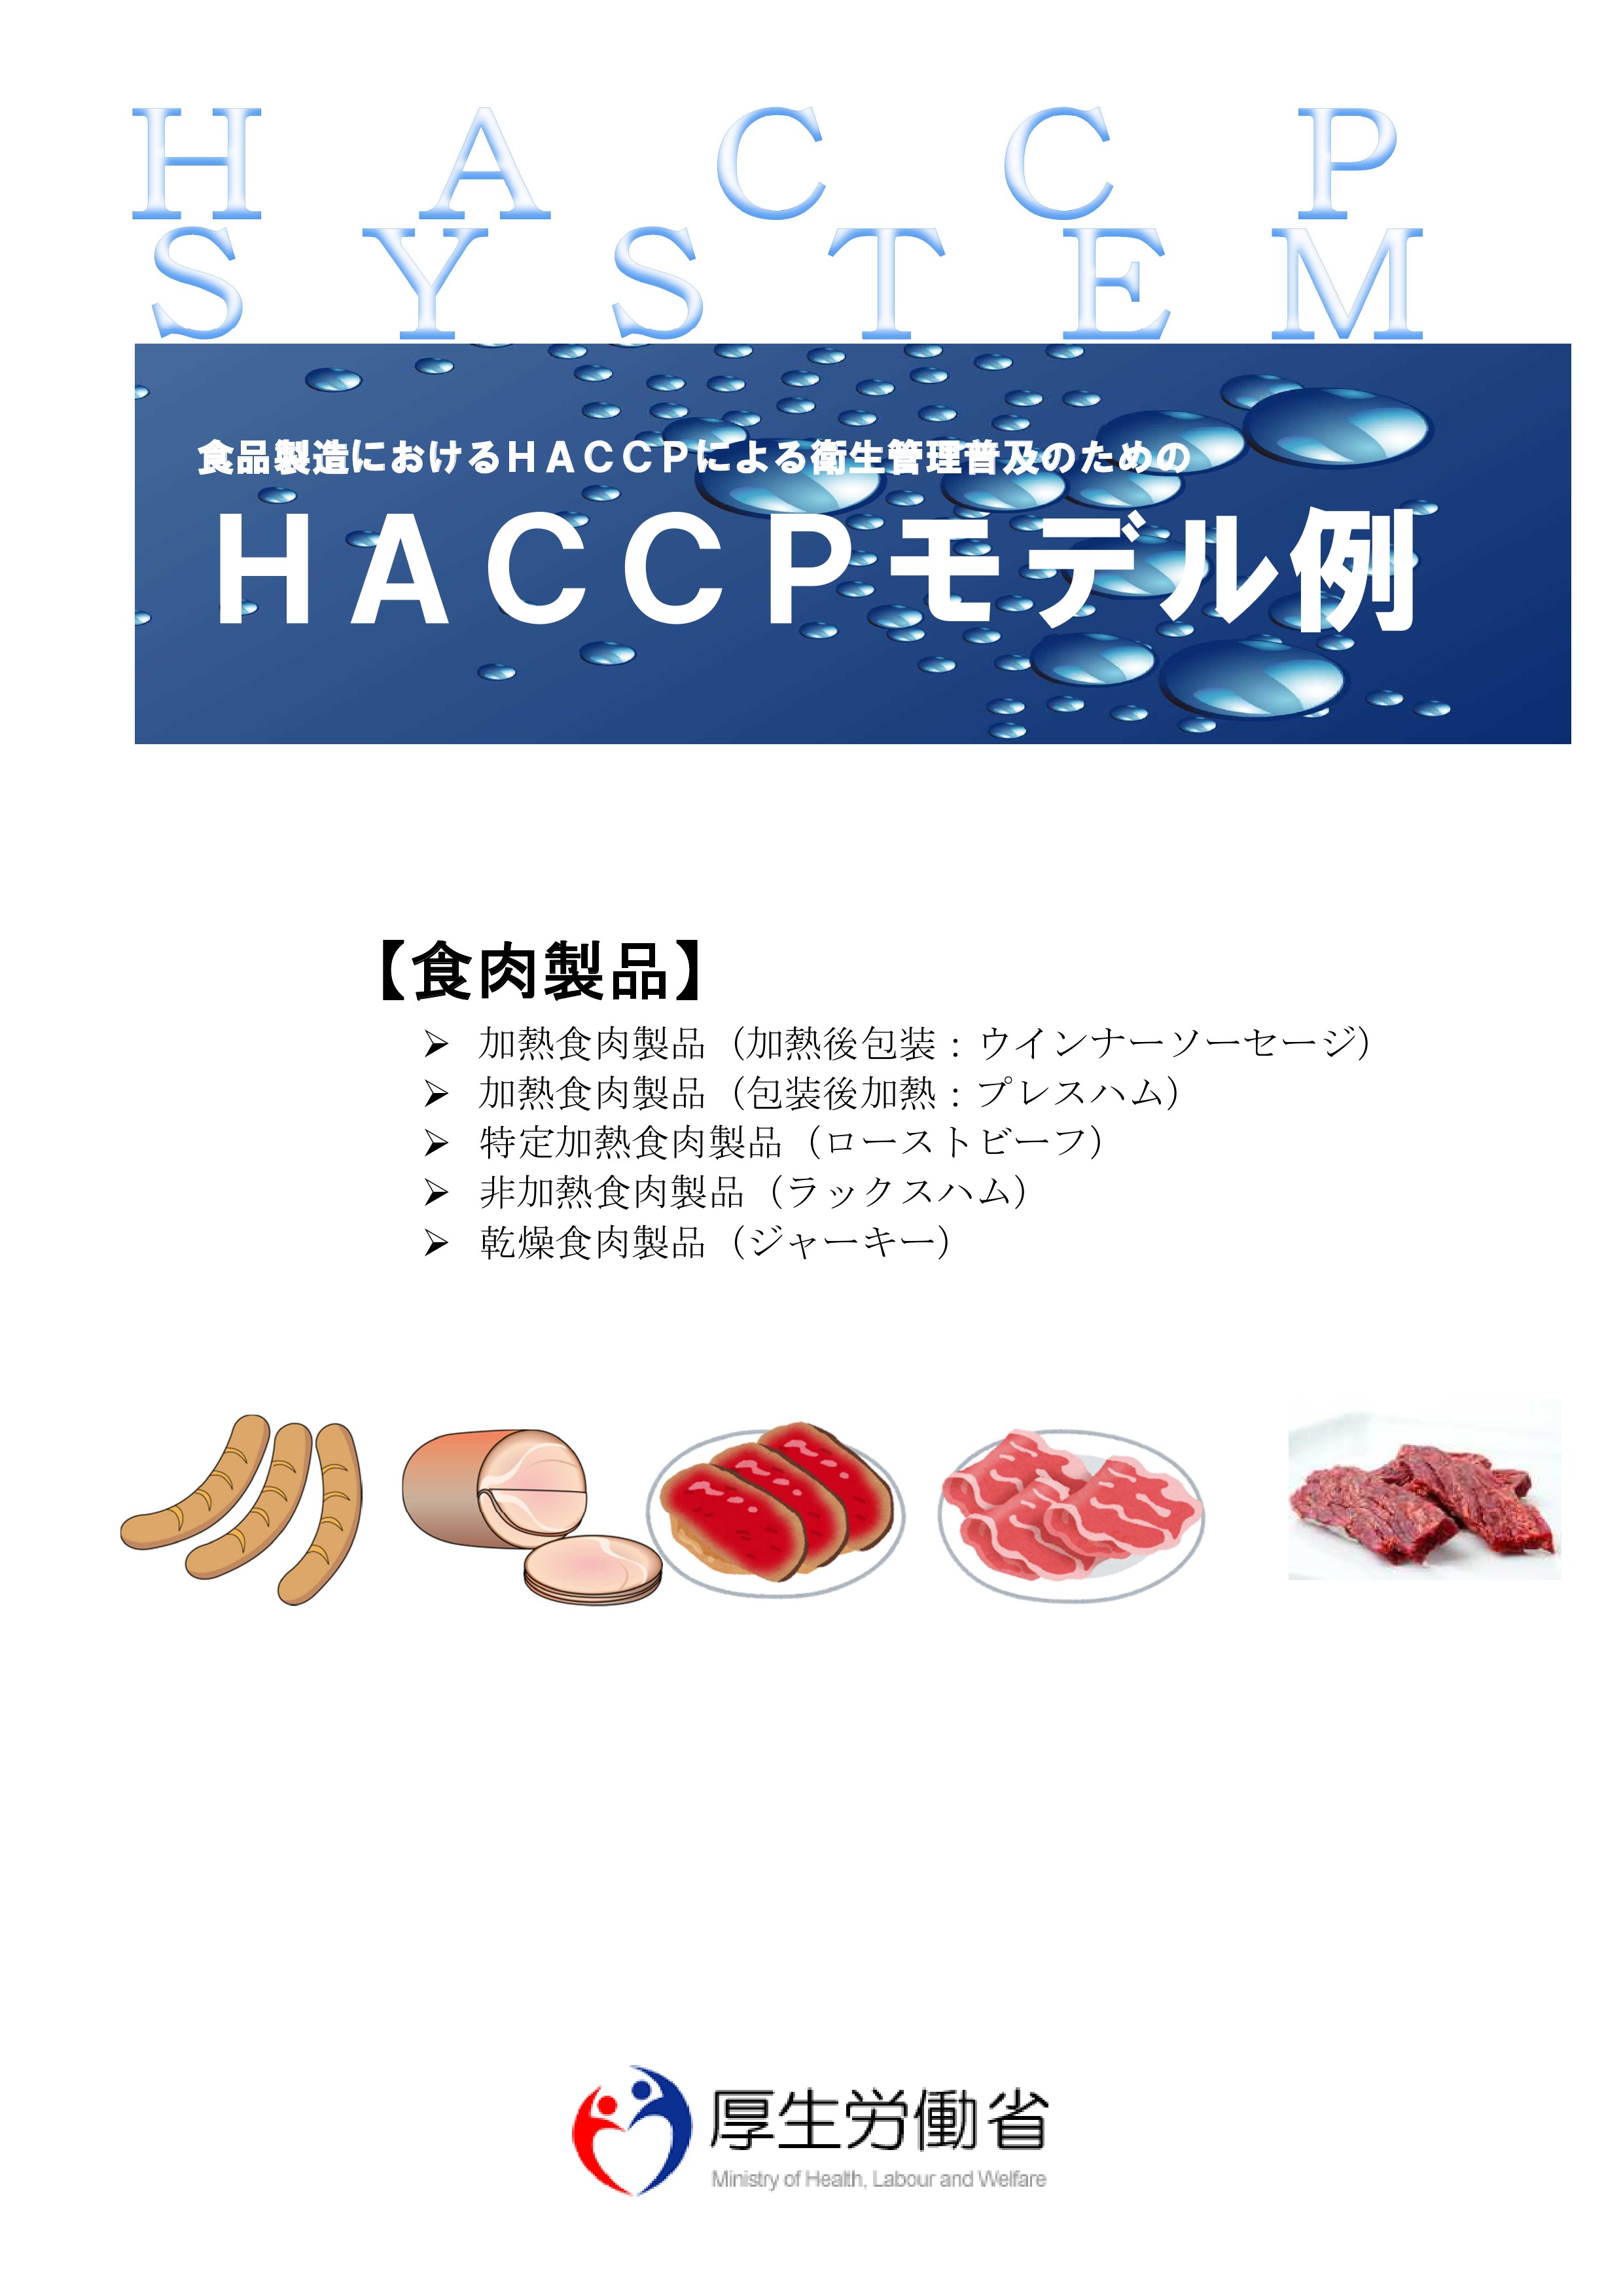 Haccpモデル例